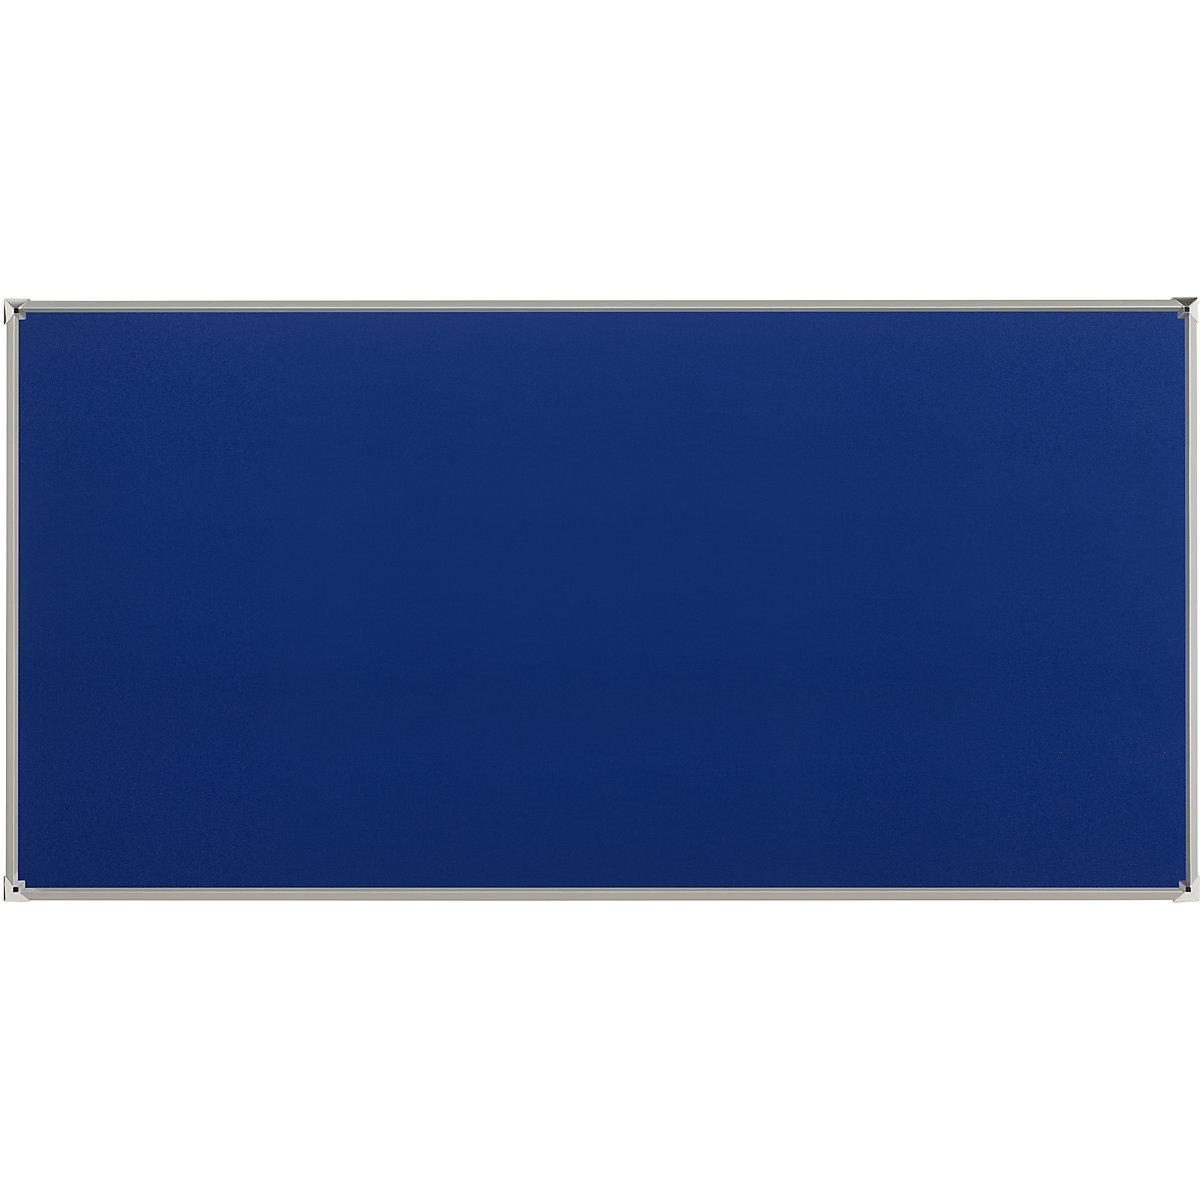 Tableau d'épinglage à cadre en aluminium – eurokraft pro, habillage tissu bleu, l x h 2400 x 1200 mm-5